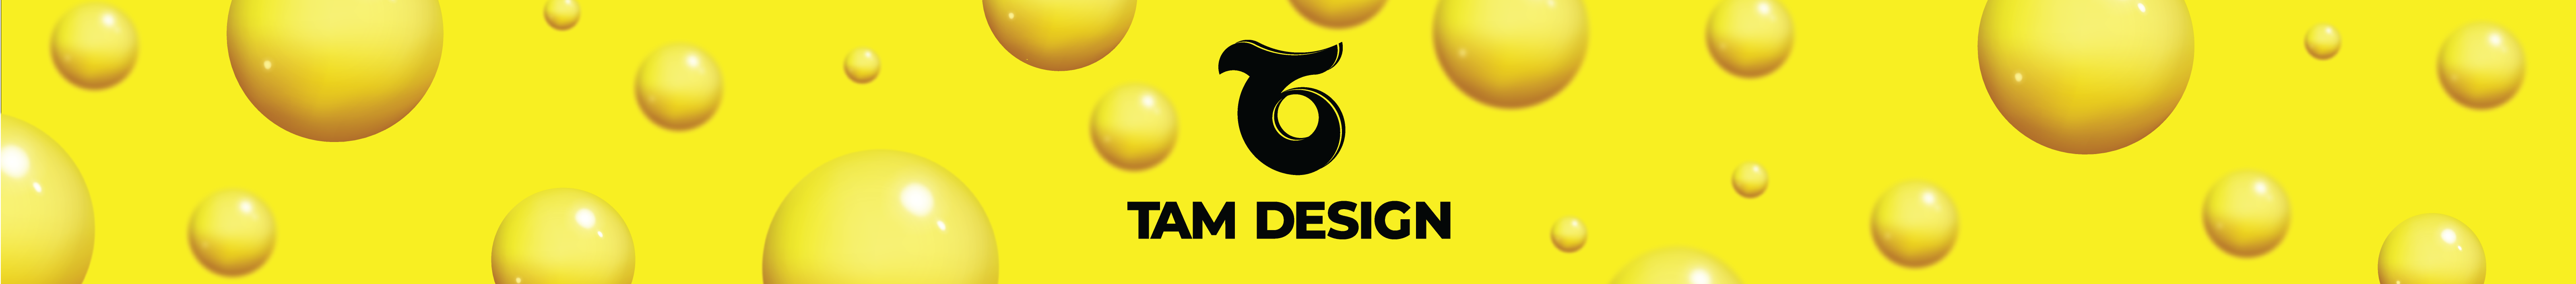 Tam Design's profile banner